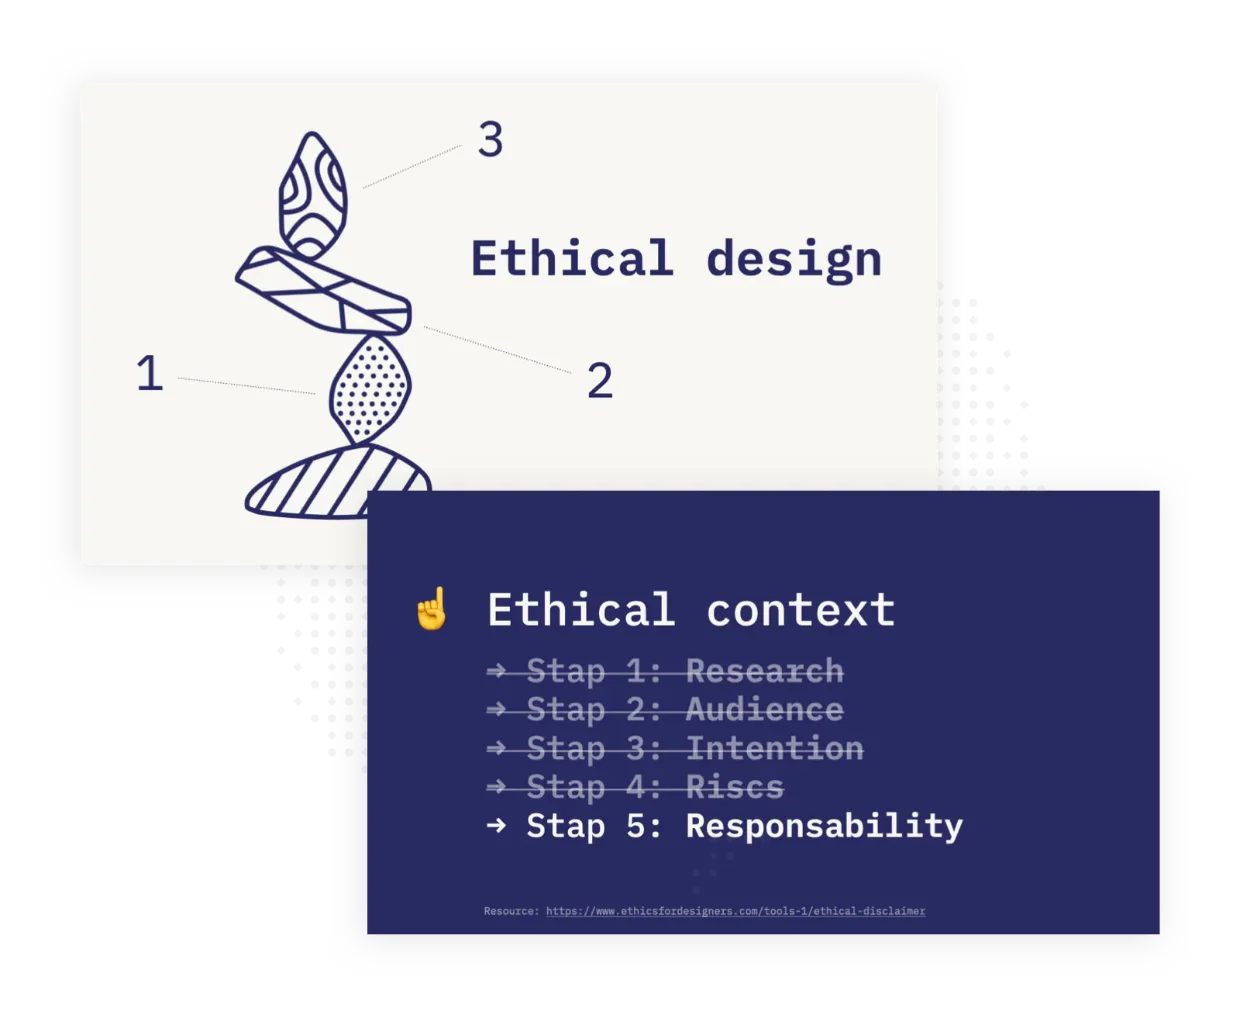 slides from an ethical design workshop